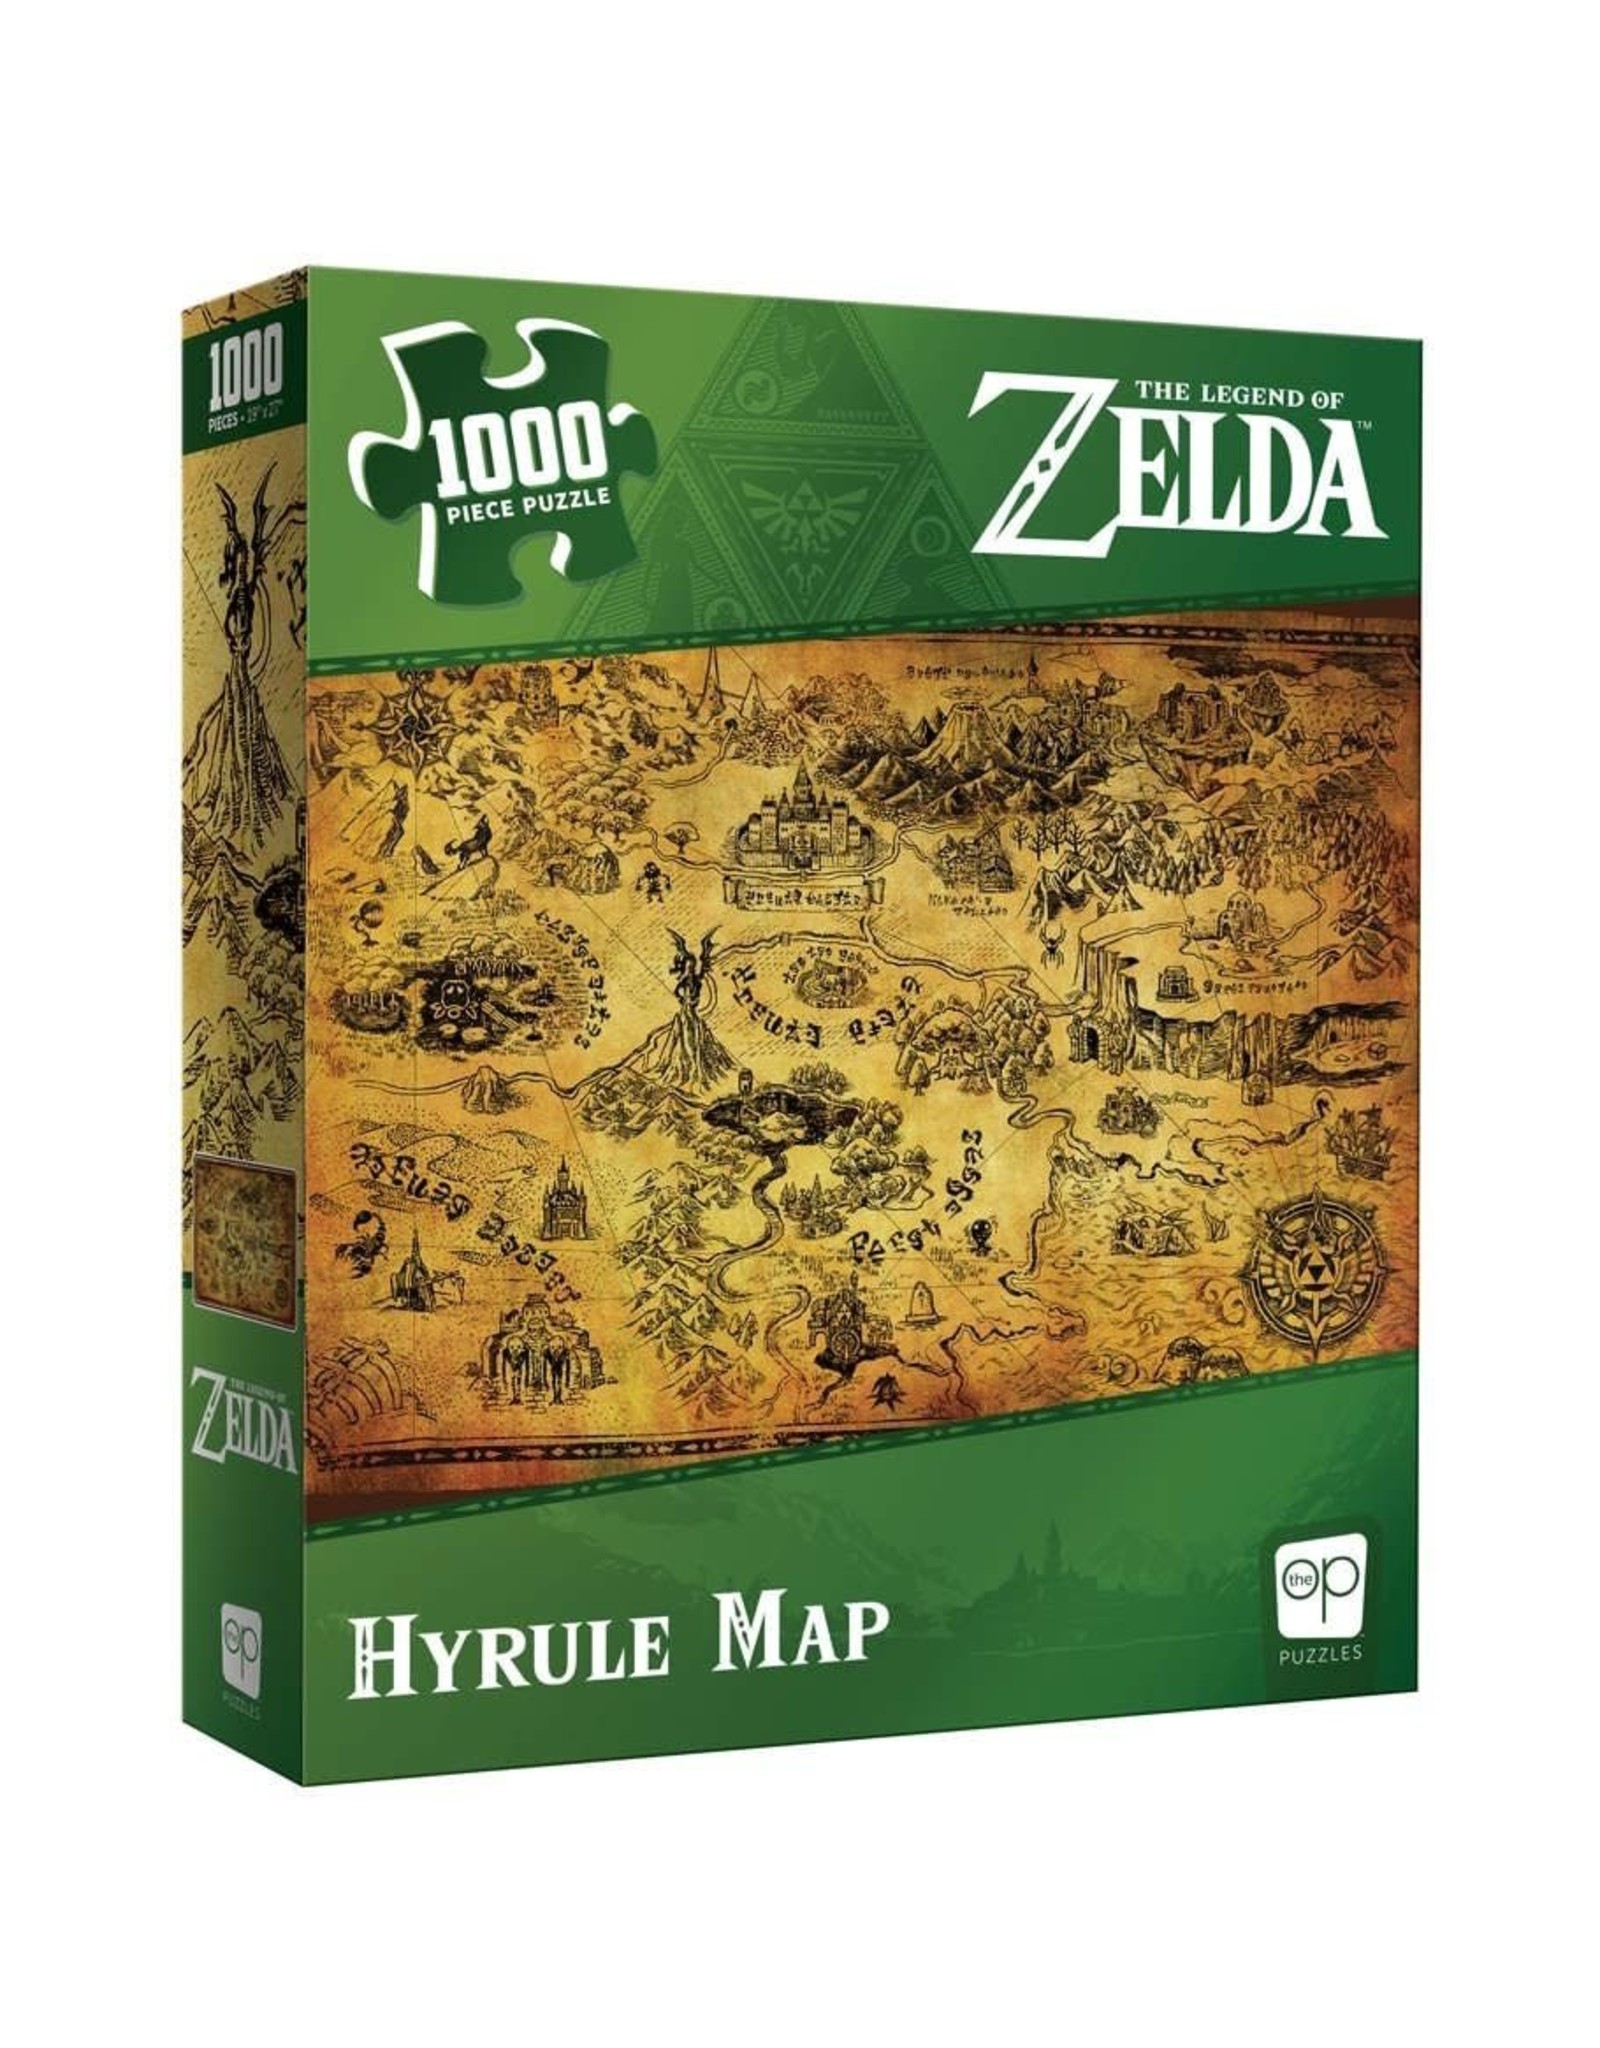 The OP Casse-tête 1000 pcs - Zelda Hyrules Map